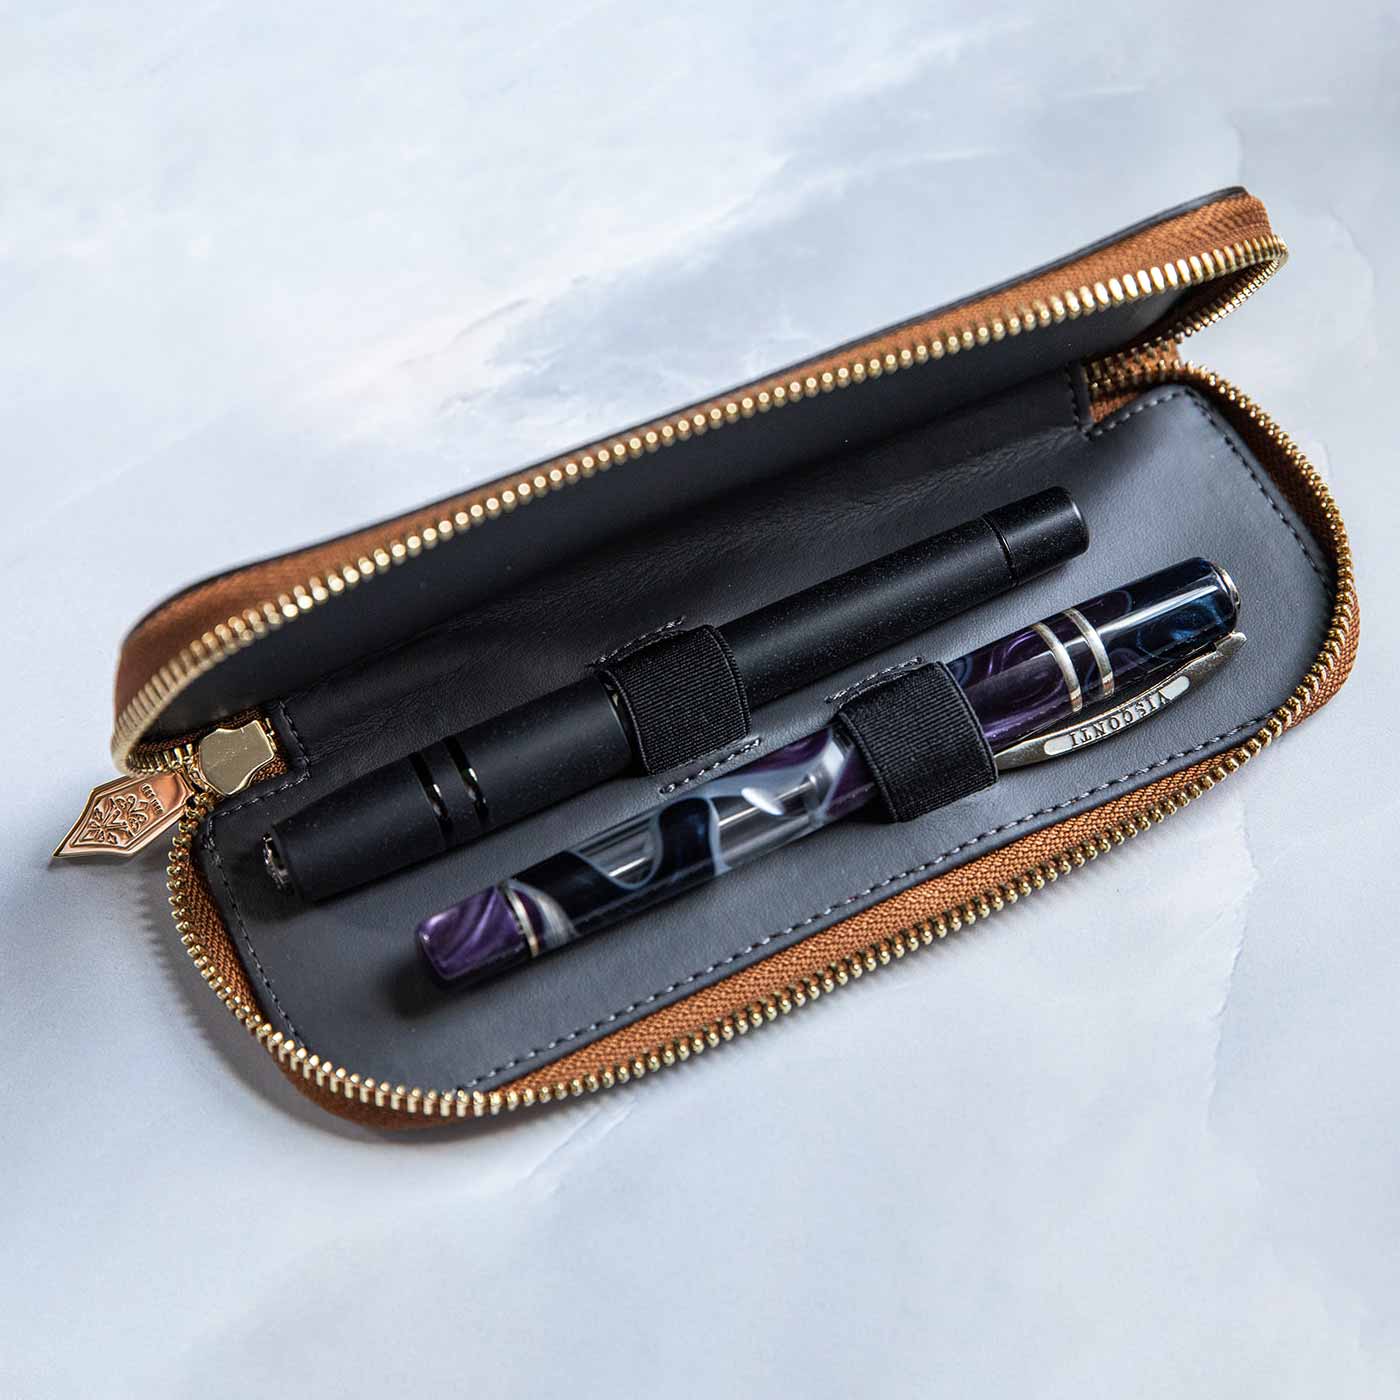 Pen Case for Fountain Pens, Fountain Pen Travel Case, Leather Pen